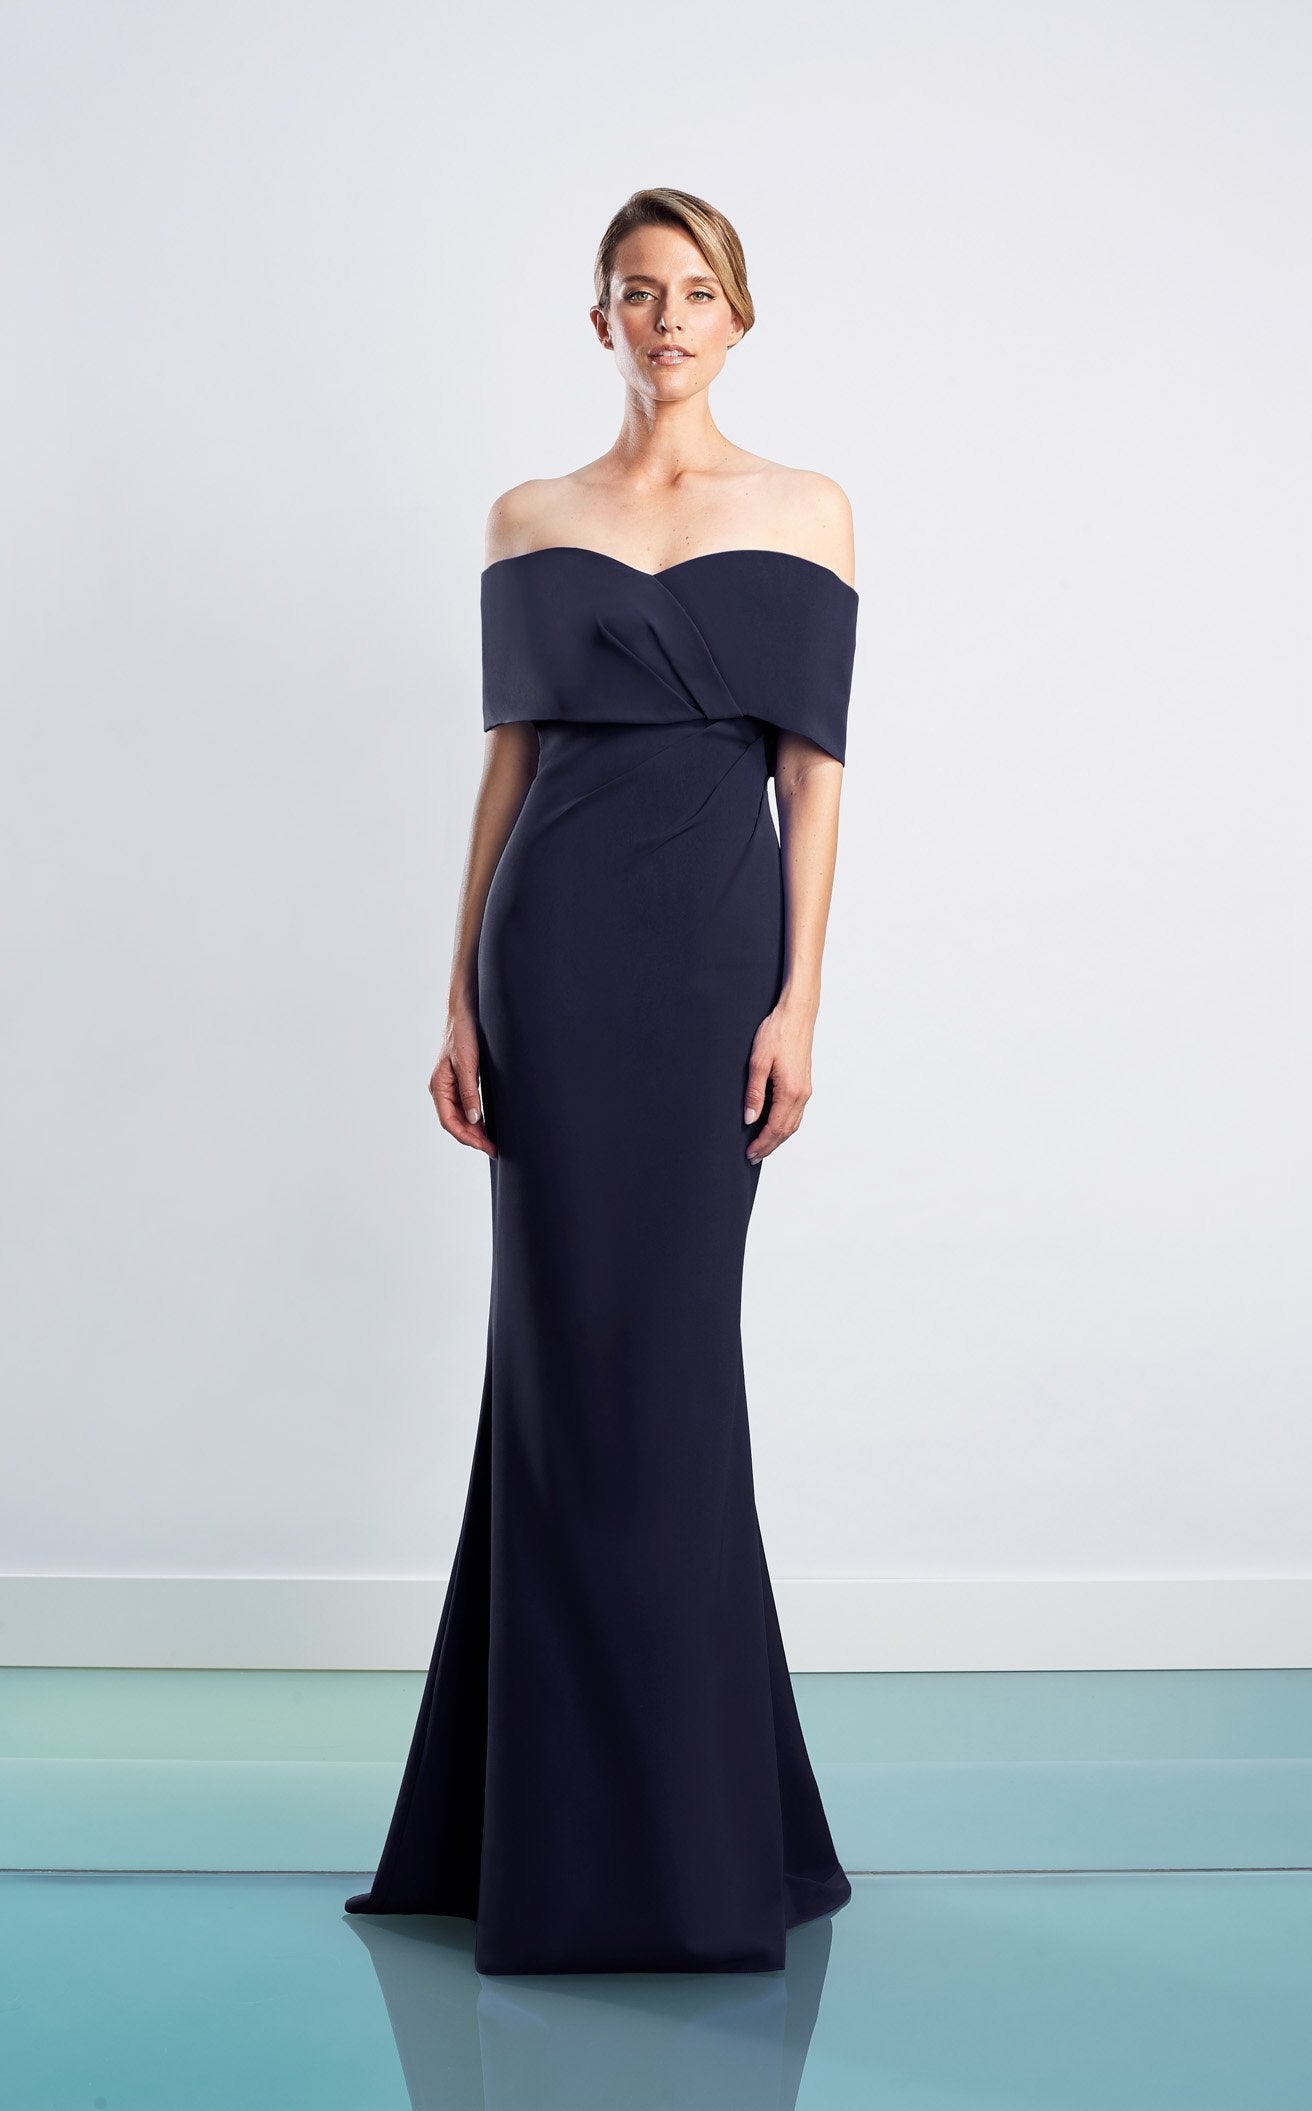 Daymor 1471 Dress | NewYorkDress.com Online Store